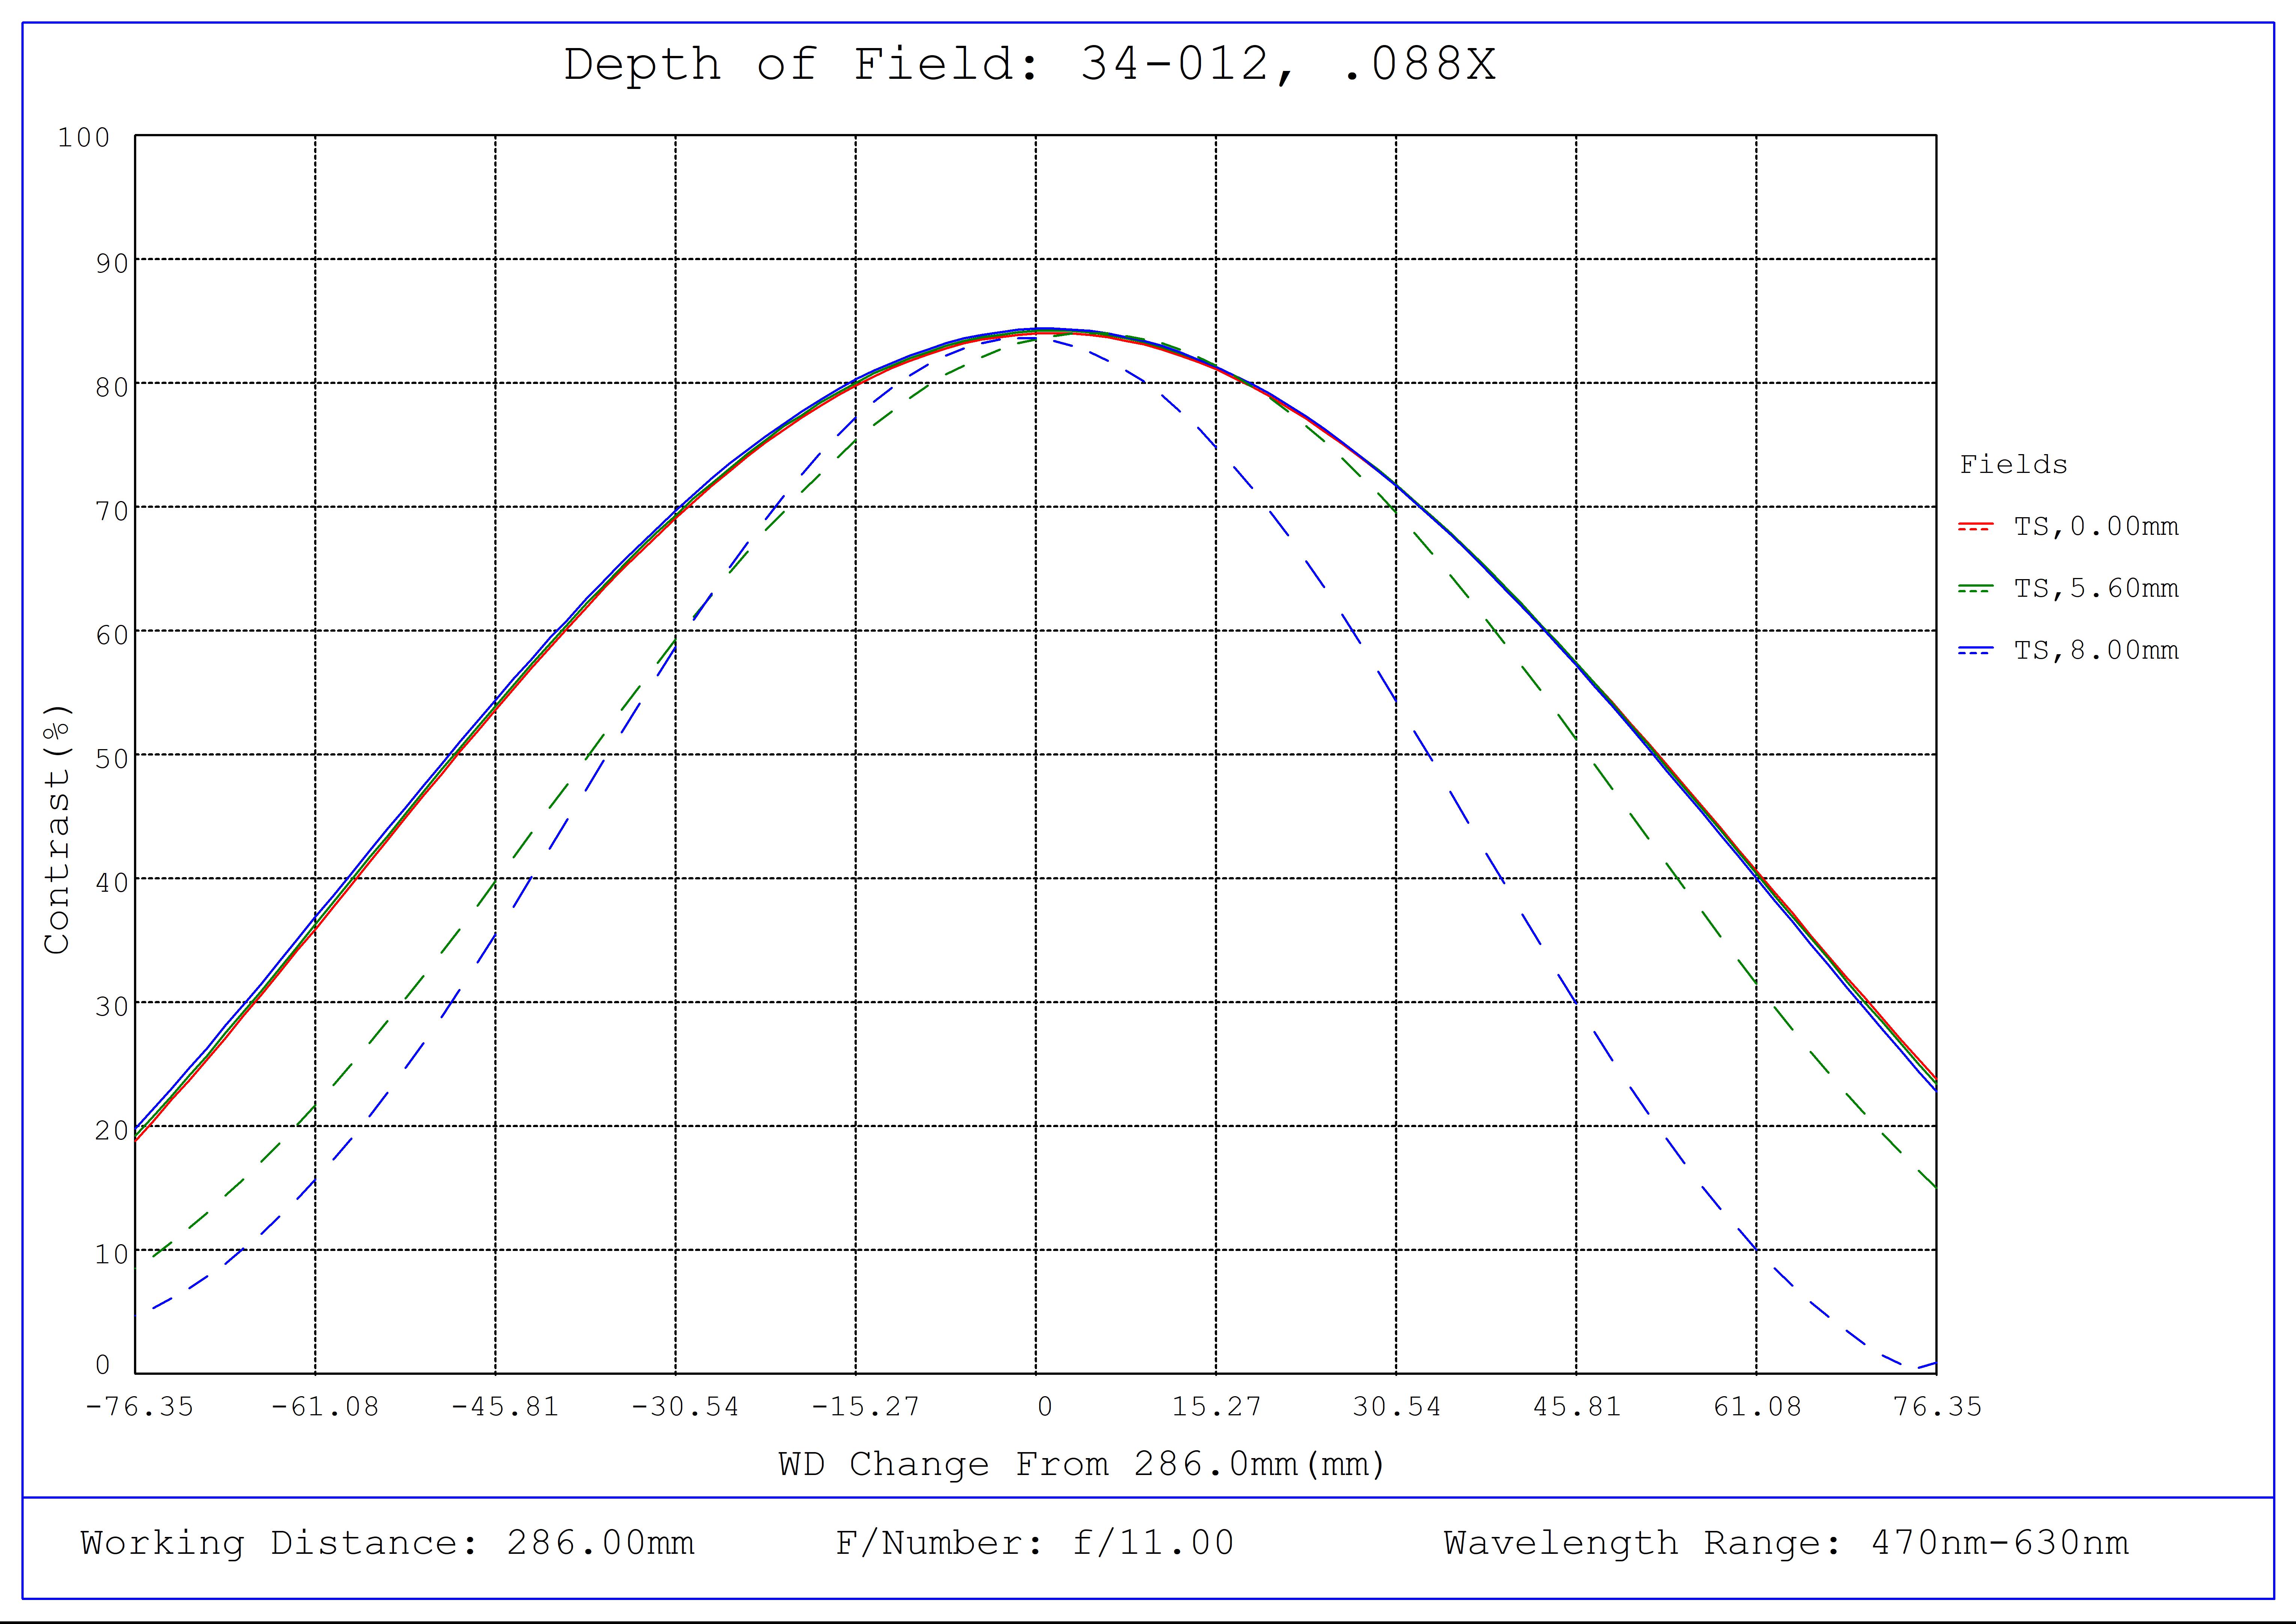 #34-012, 0.088X, 1" C-Mount TitanTL® Telecentric Lens, Depth of Field Plot, 286mm Working Distance, f11